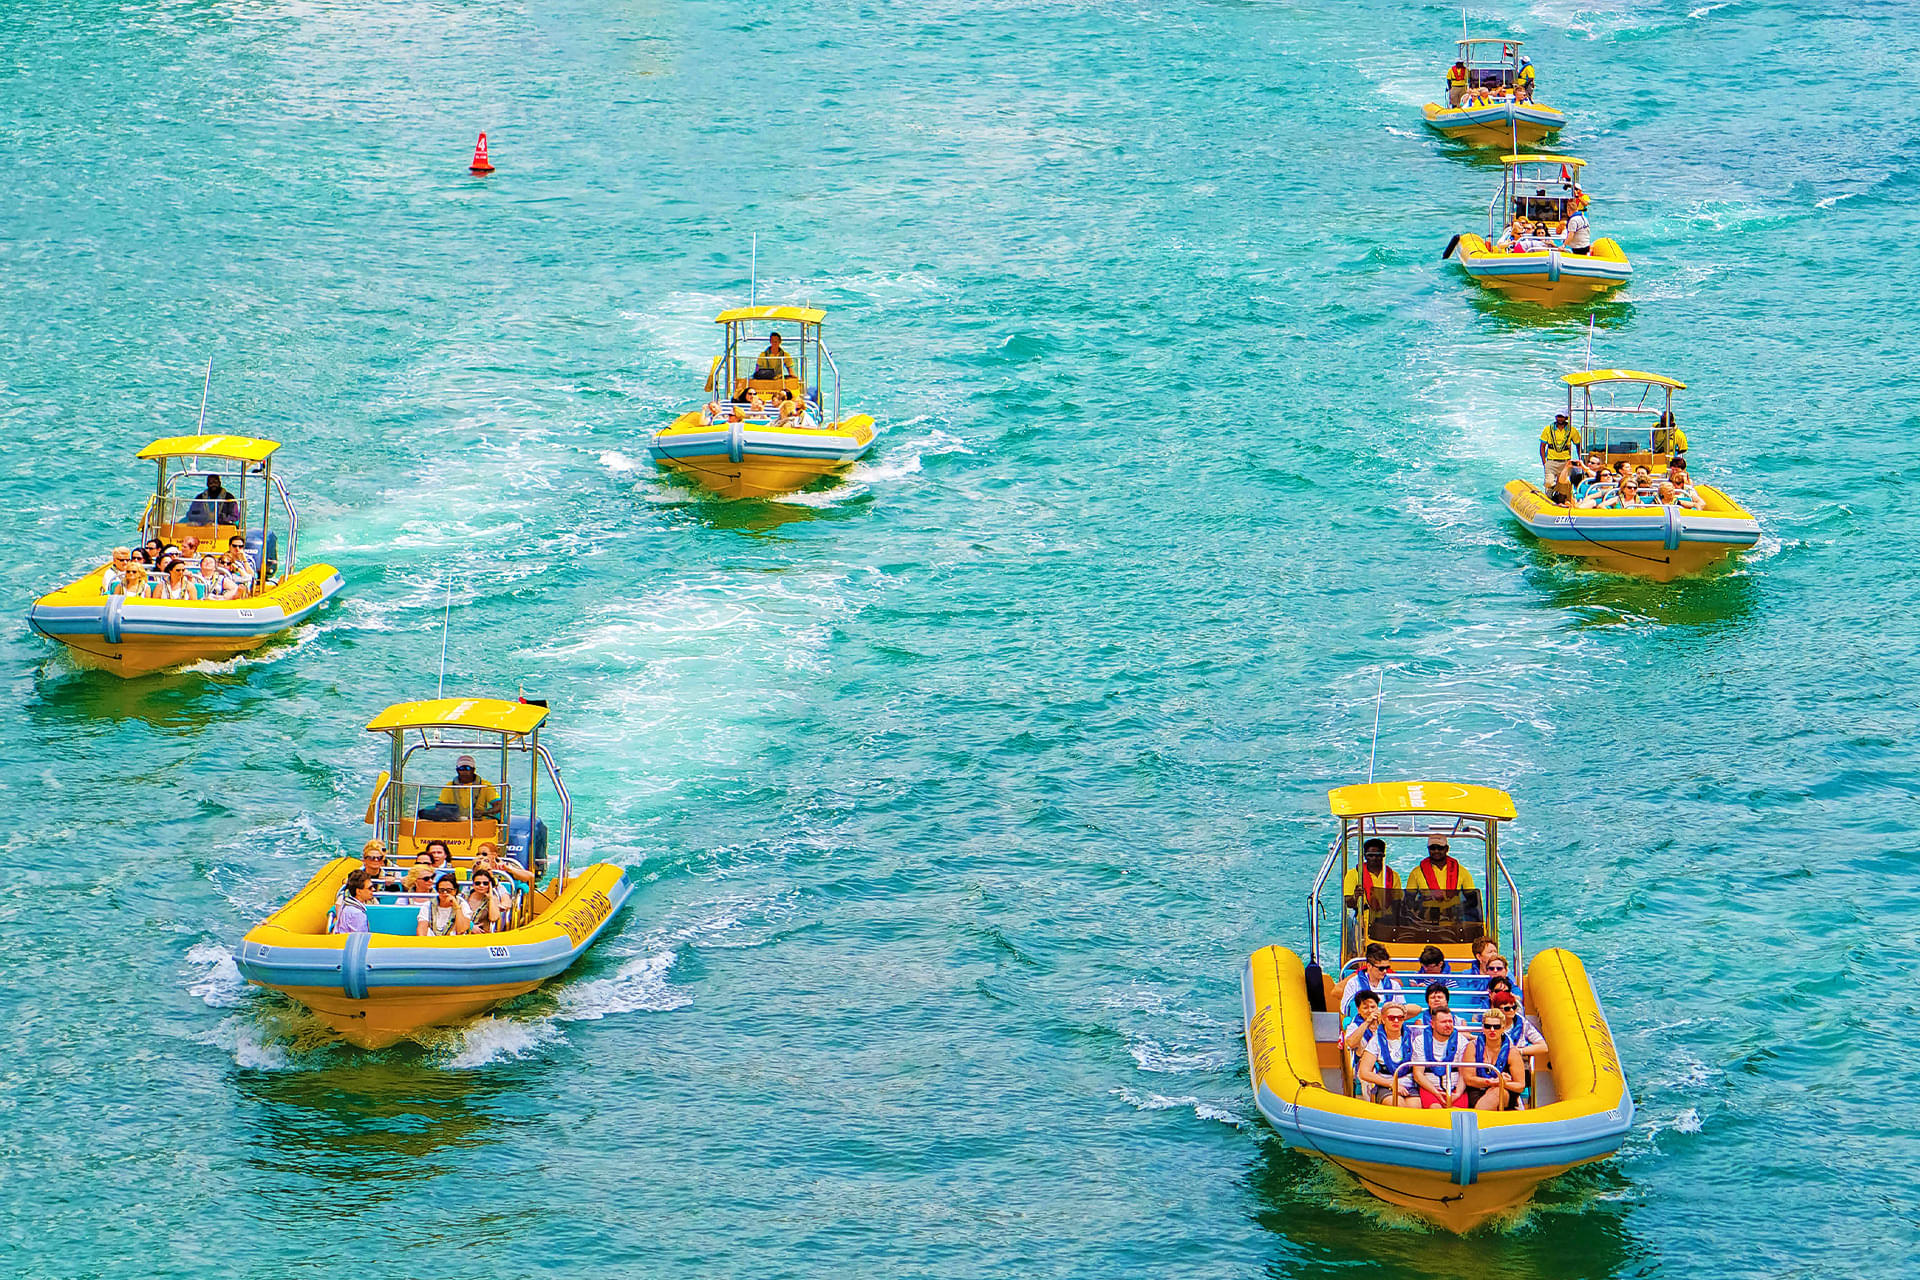 People enjoying boat rides on Dubai's turquoise-blue waters